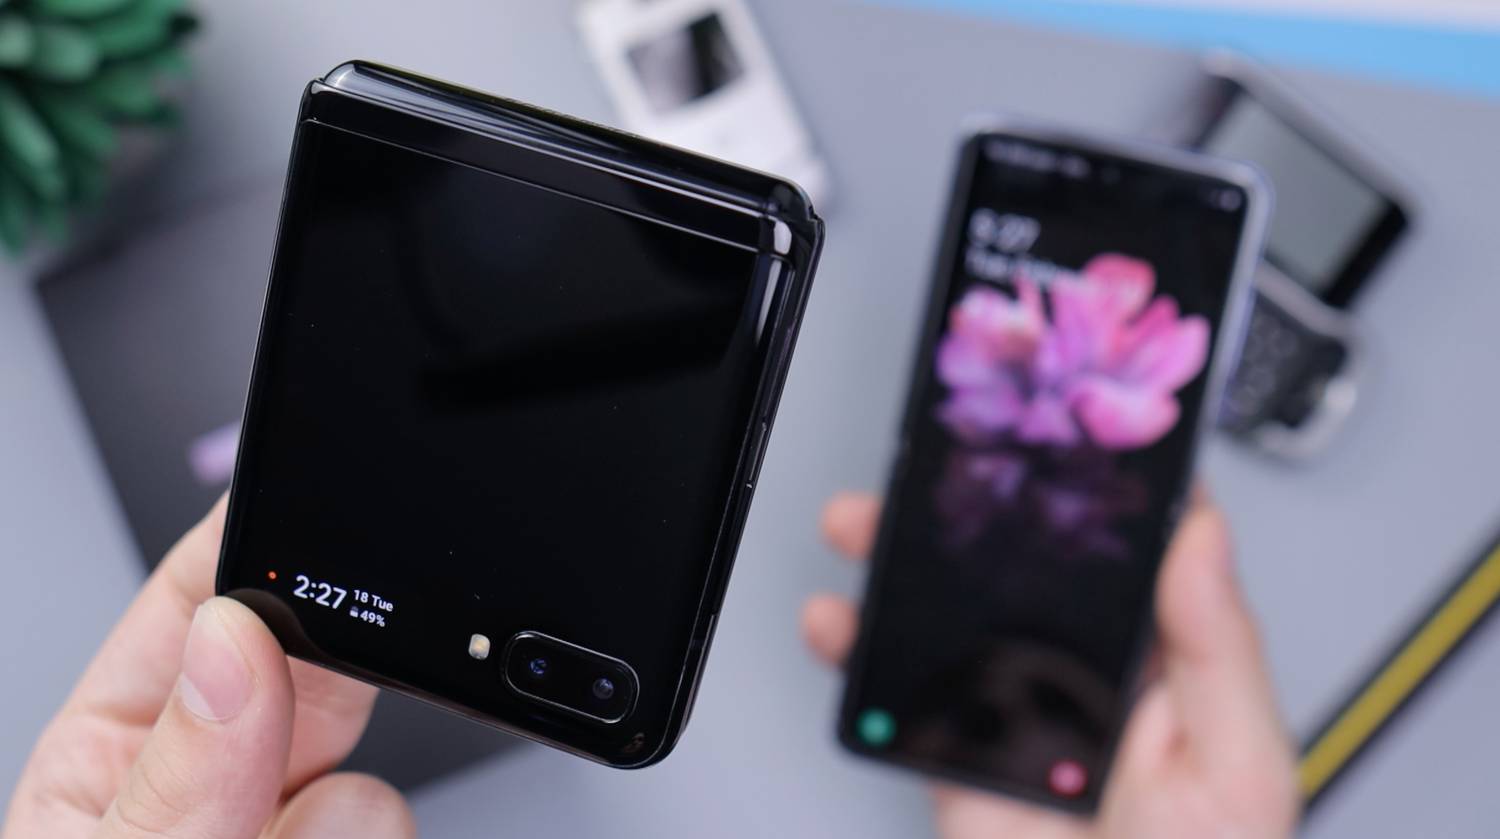 Samsung Foldable Phone in Hand.jpg?q=50&fit=crop&w=1500&dpr=1